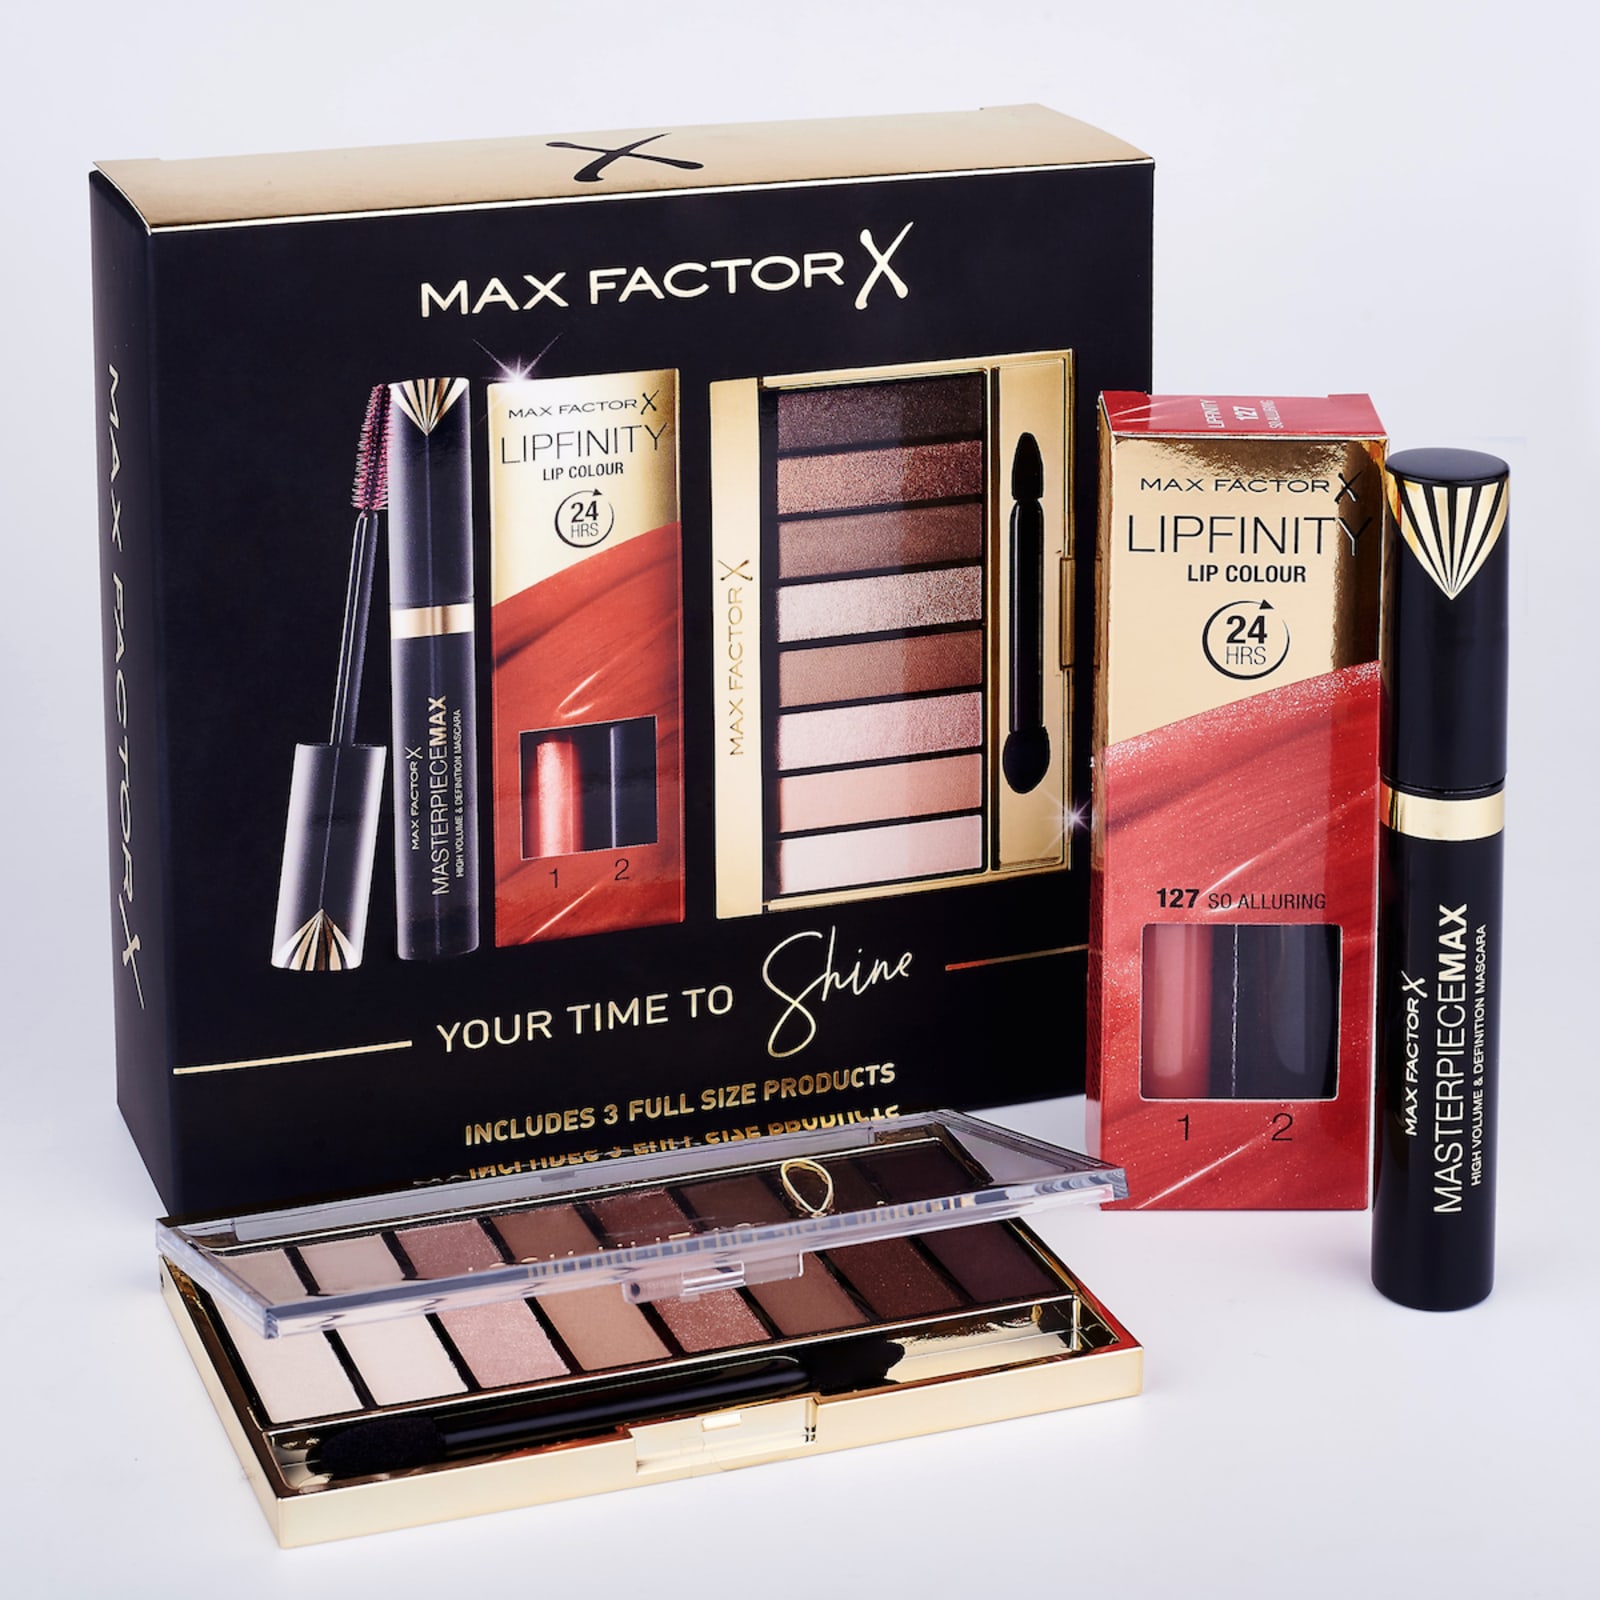 Verlating kunstmest bruiloft Mother's Day Makeup Gifts She'll Love | Max Factor